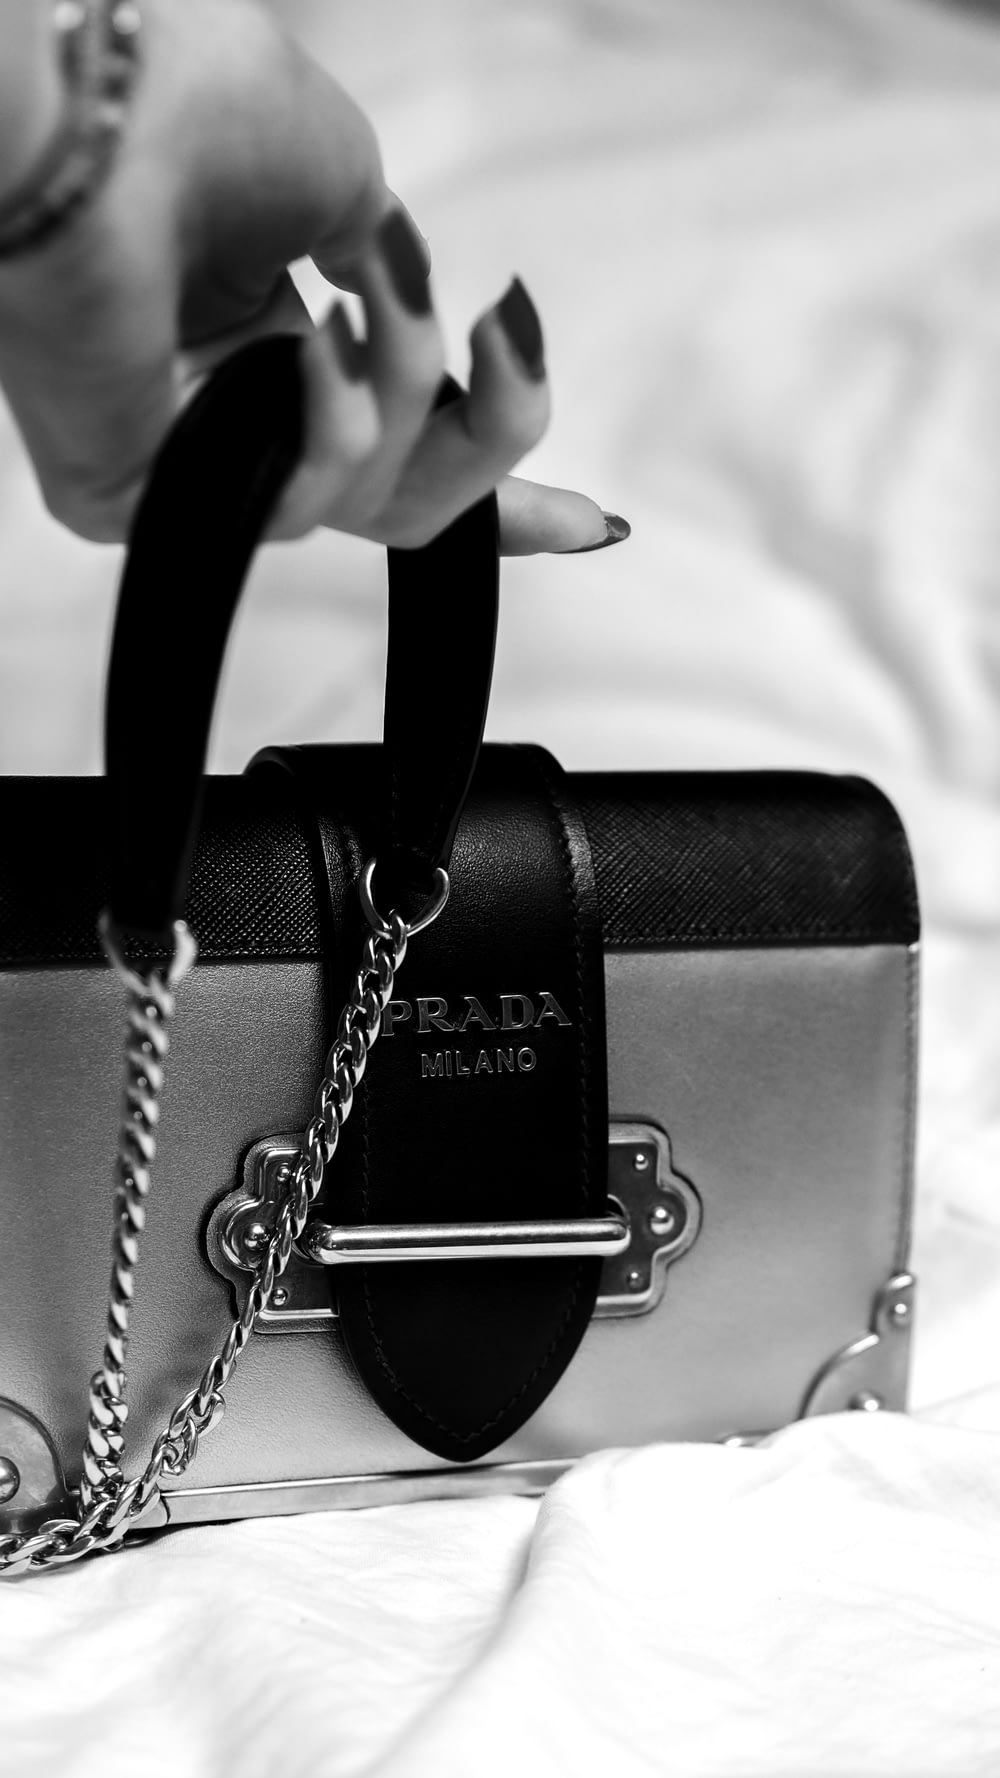 black and white leather handbag